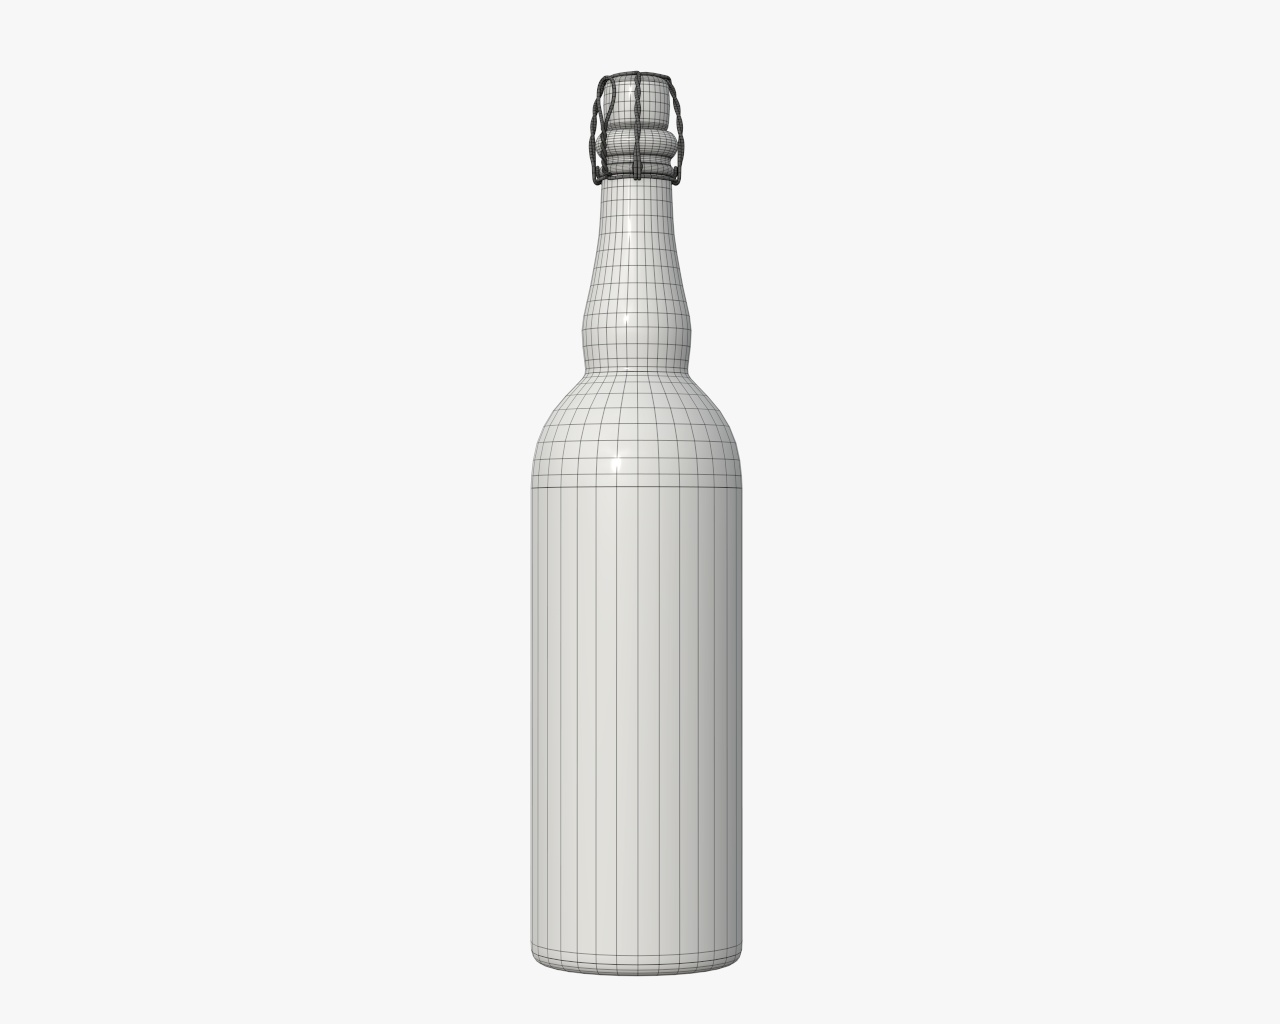 Beer bottle blank